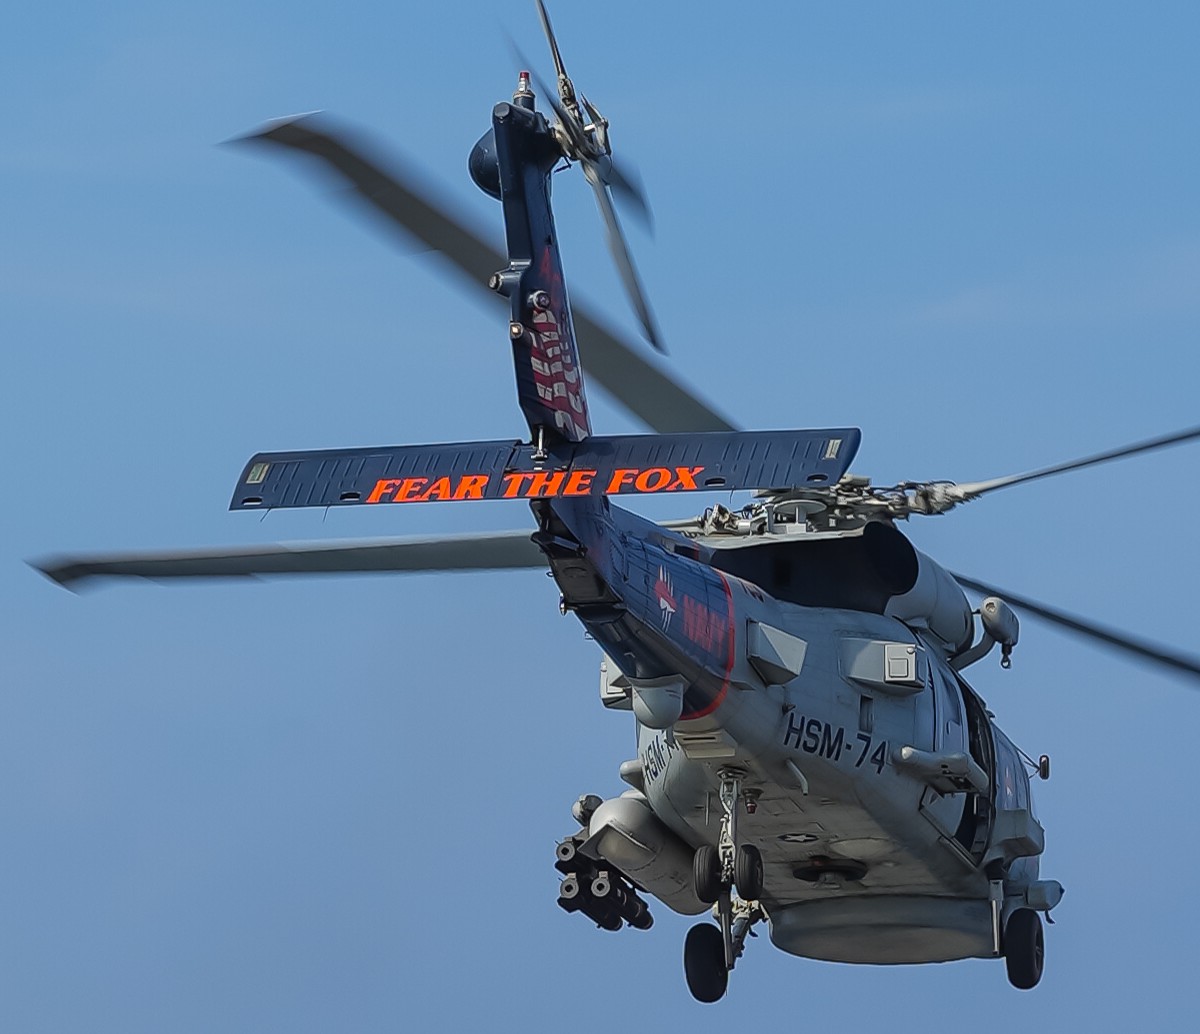 hsm-74 swamp foxes helicopter maritime strike squadron mh-60r seahawk cvw-3 cvn-69 uss dwight d. eisenhower 121